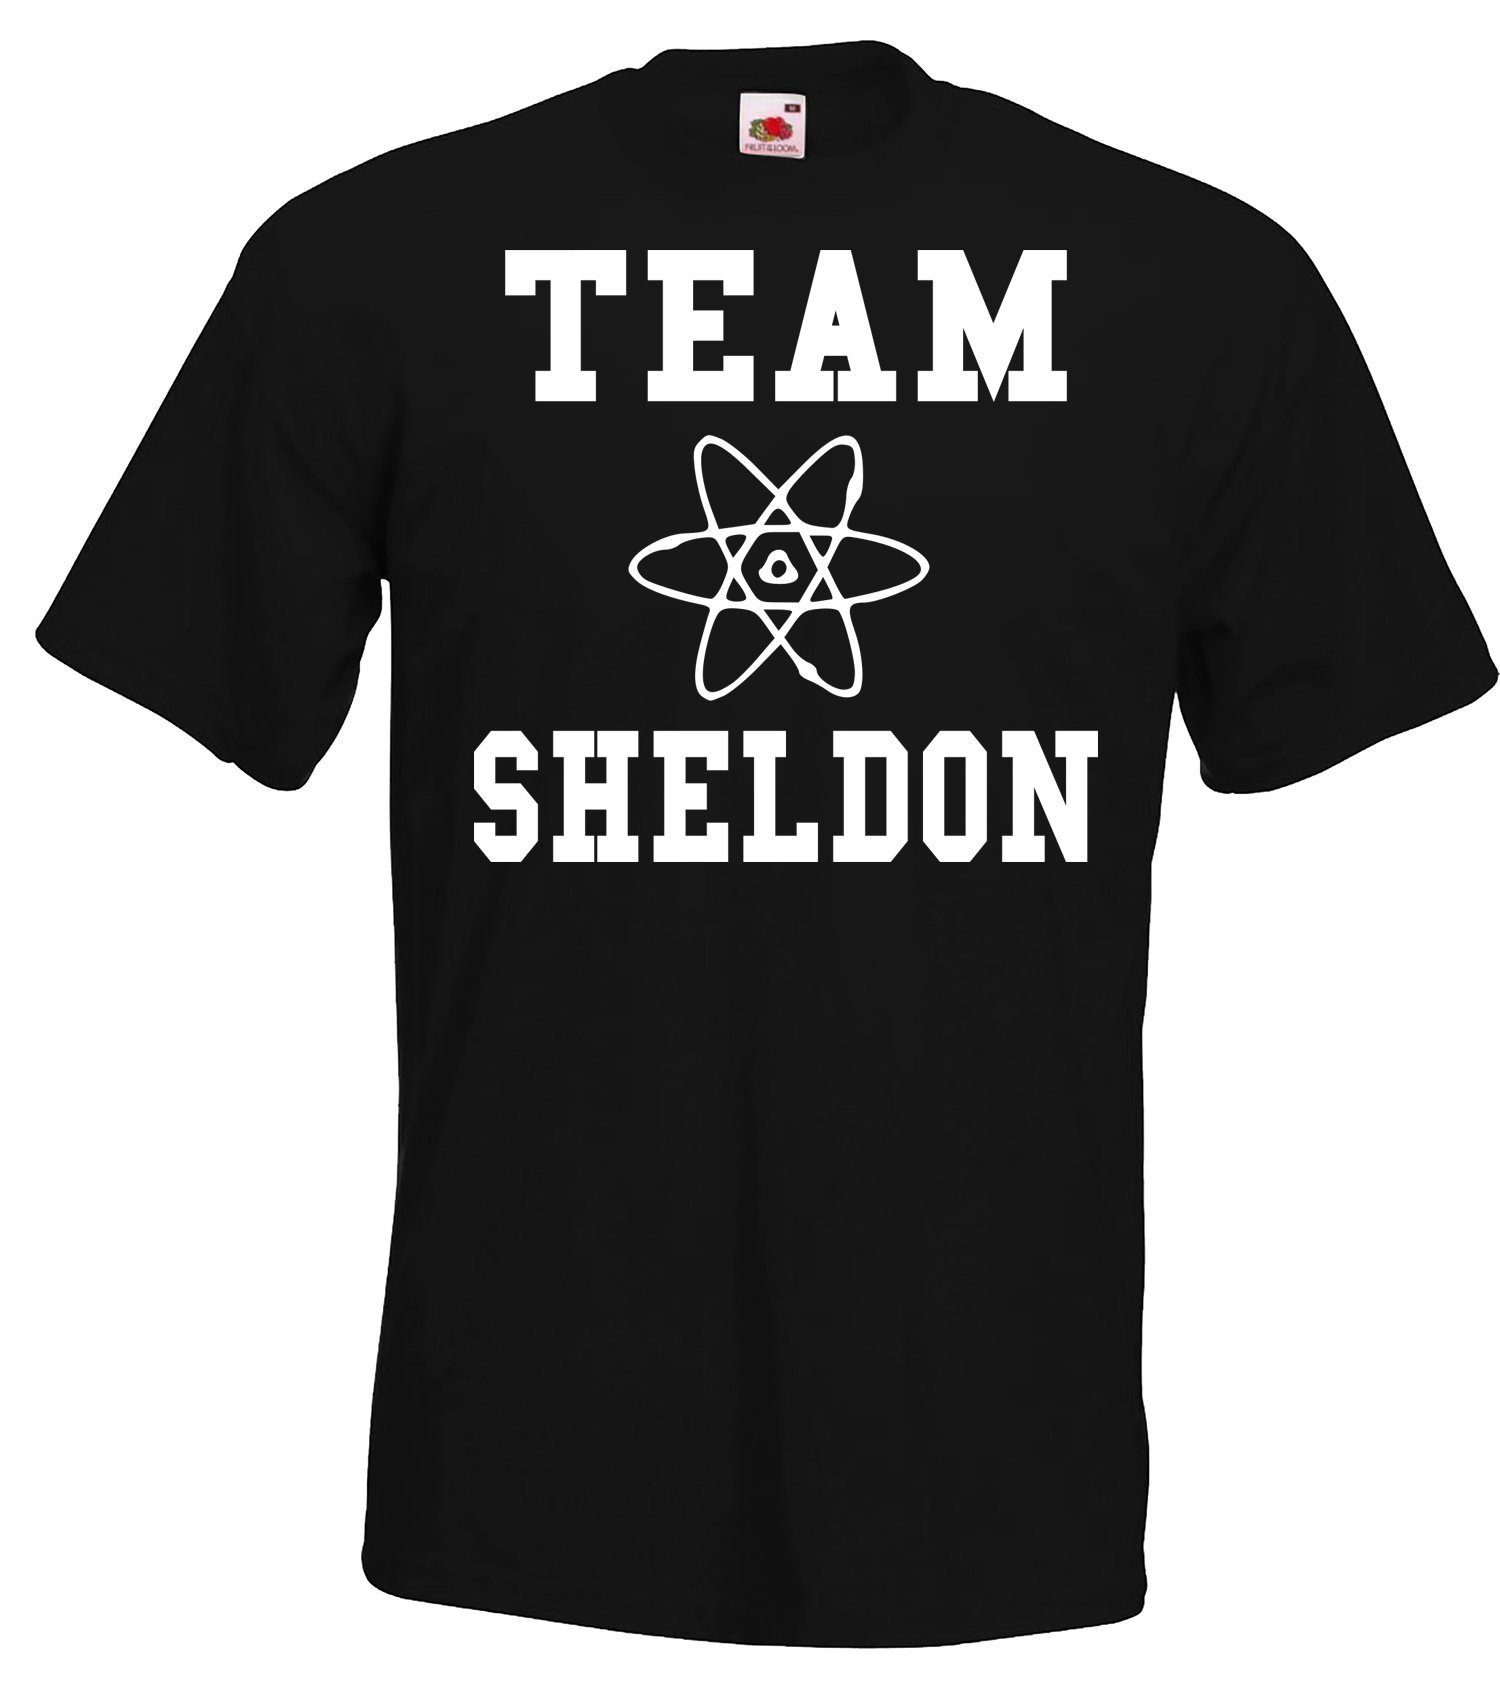 Youth Designz T-Shirt Team Sheldon Motiv mit Schwarz Herren trendigem T-Shirt